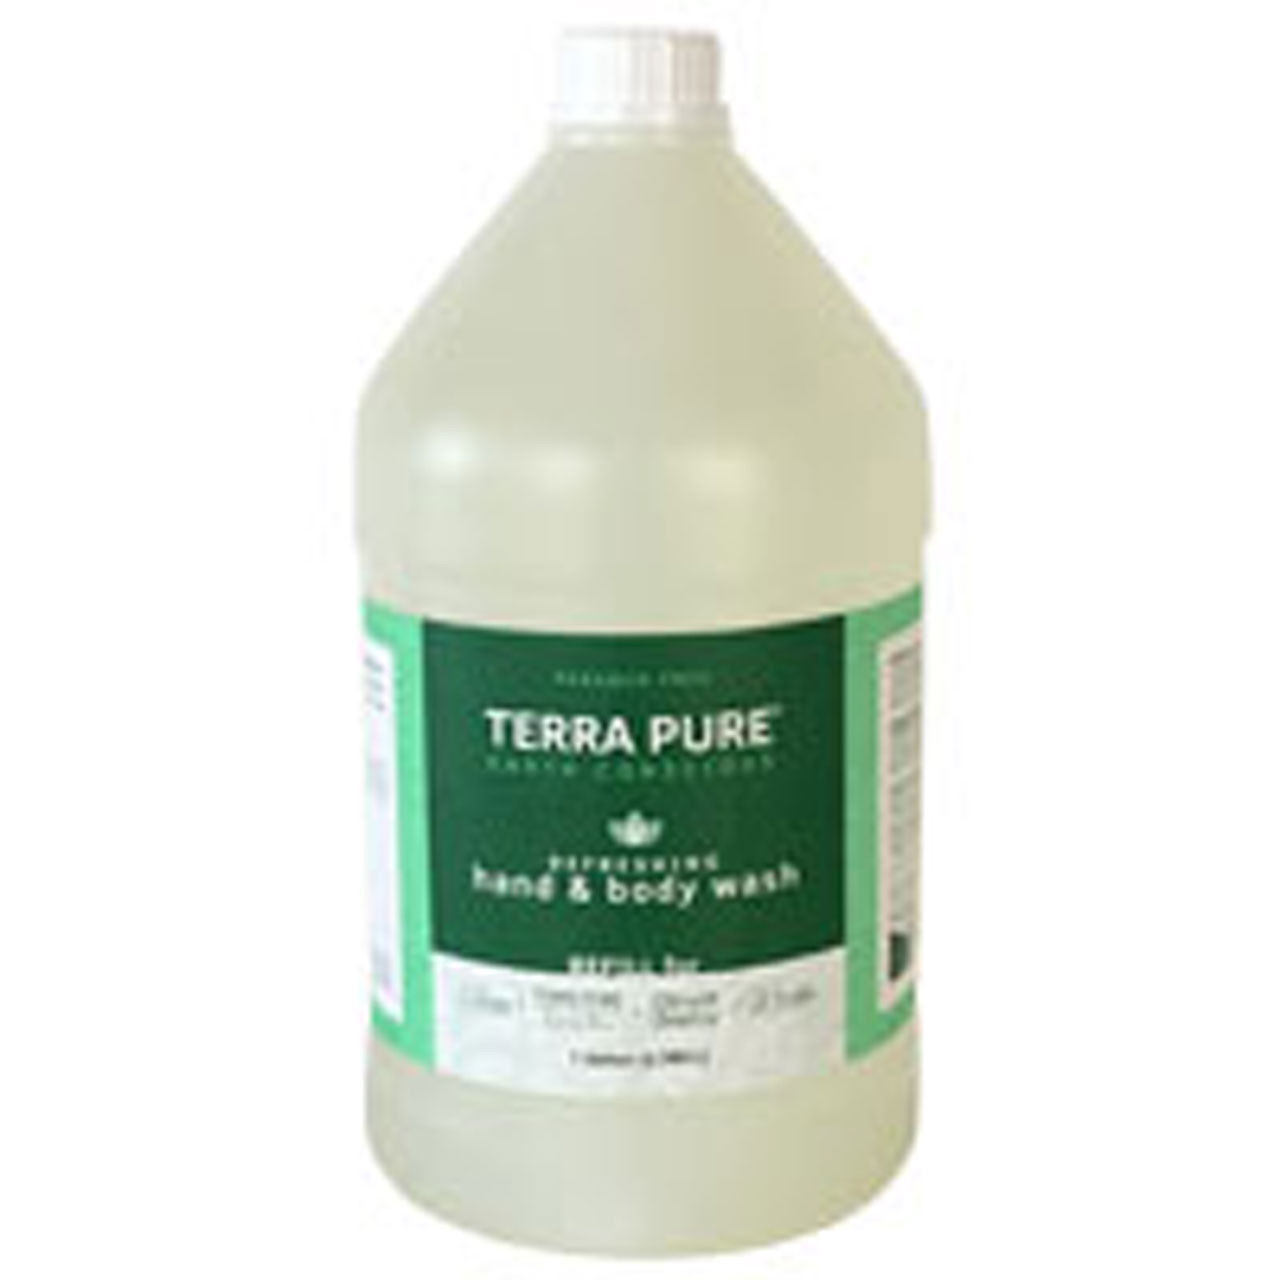 Has Terra Pure Green Tea Bulk been tested on animals?